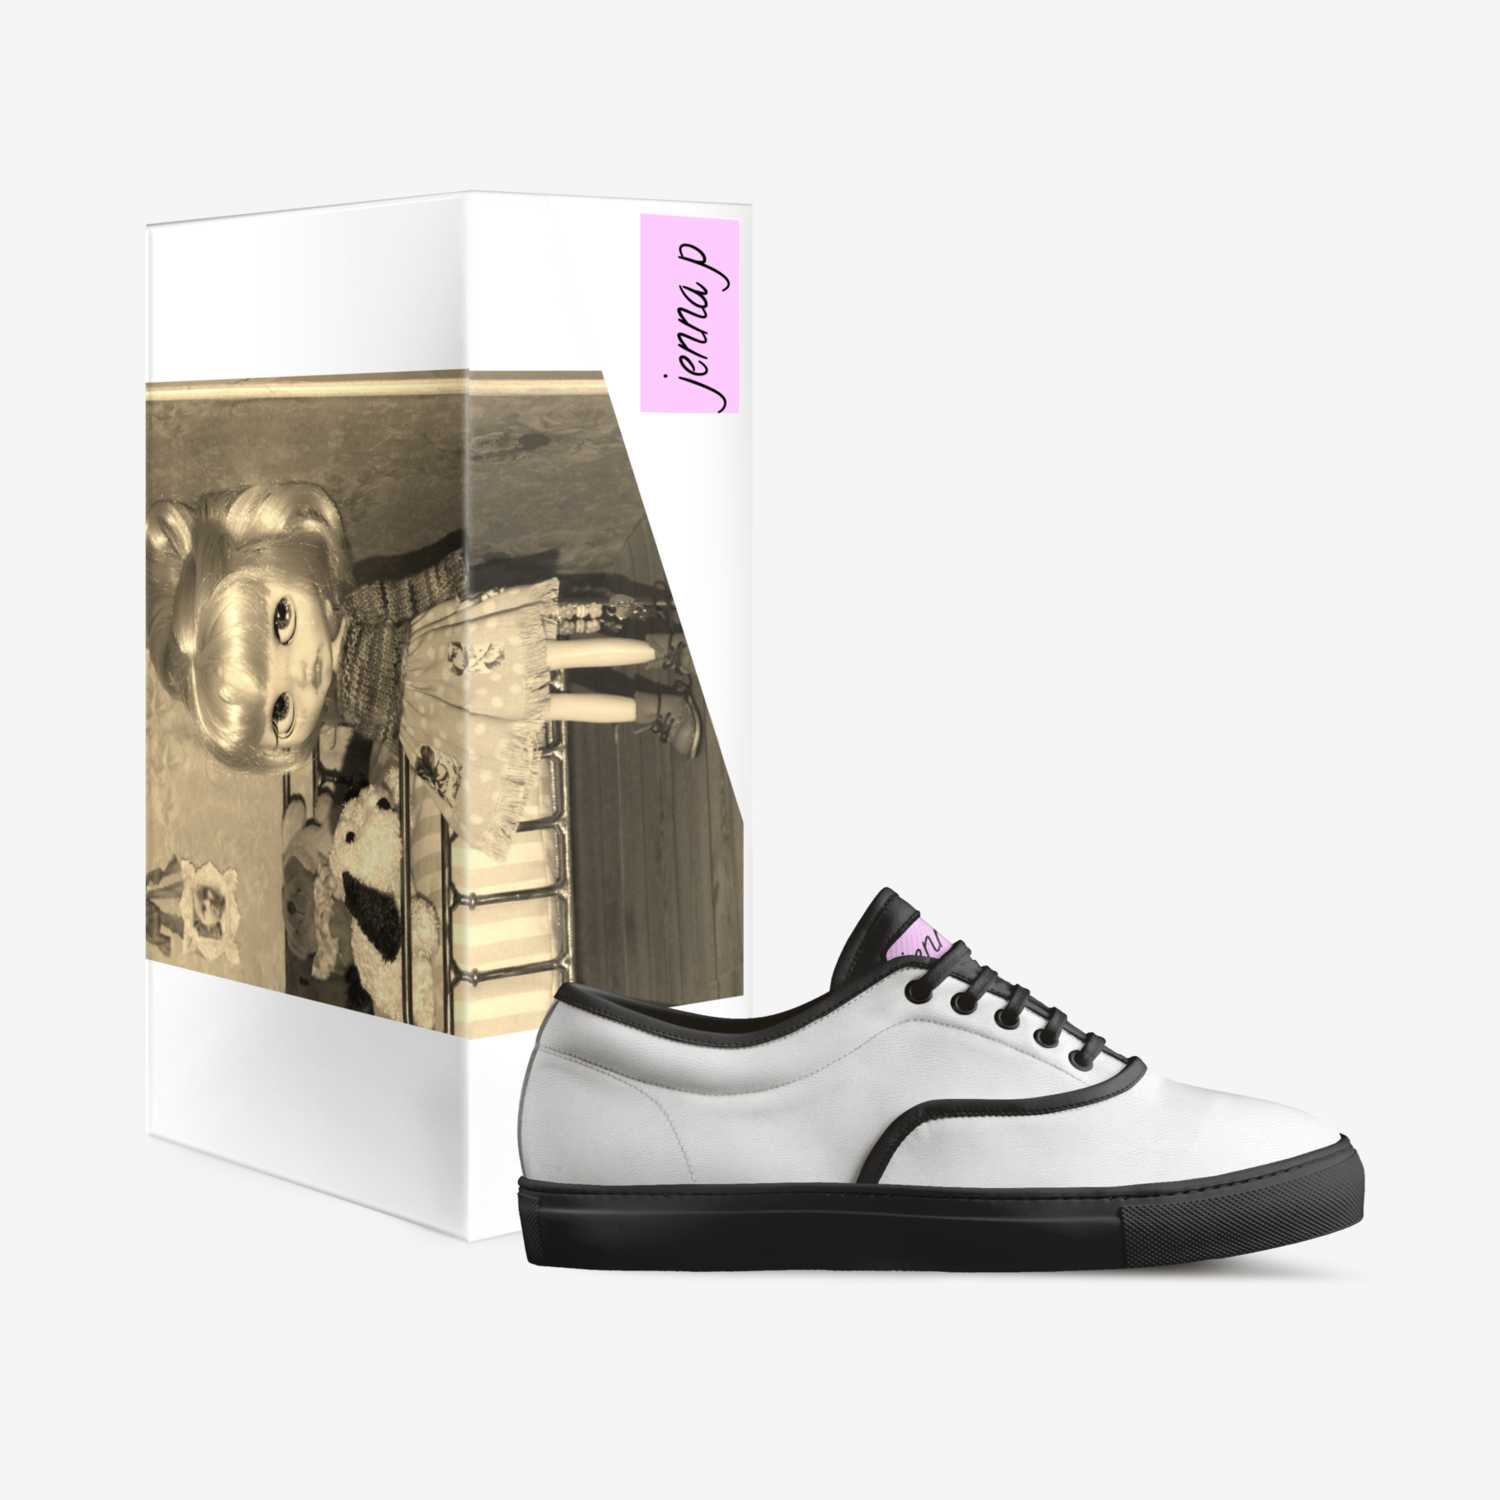 jenna p custom made in Italy shoes by Jenna Powell | Box view